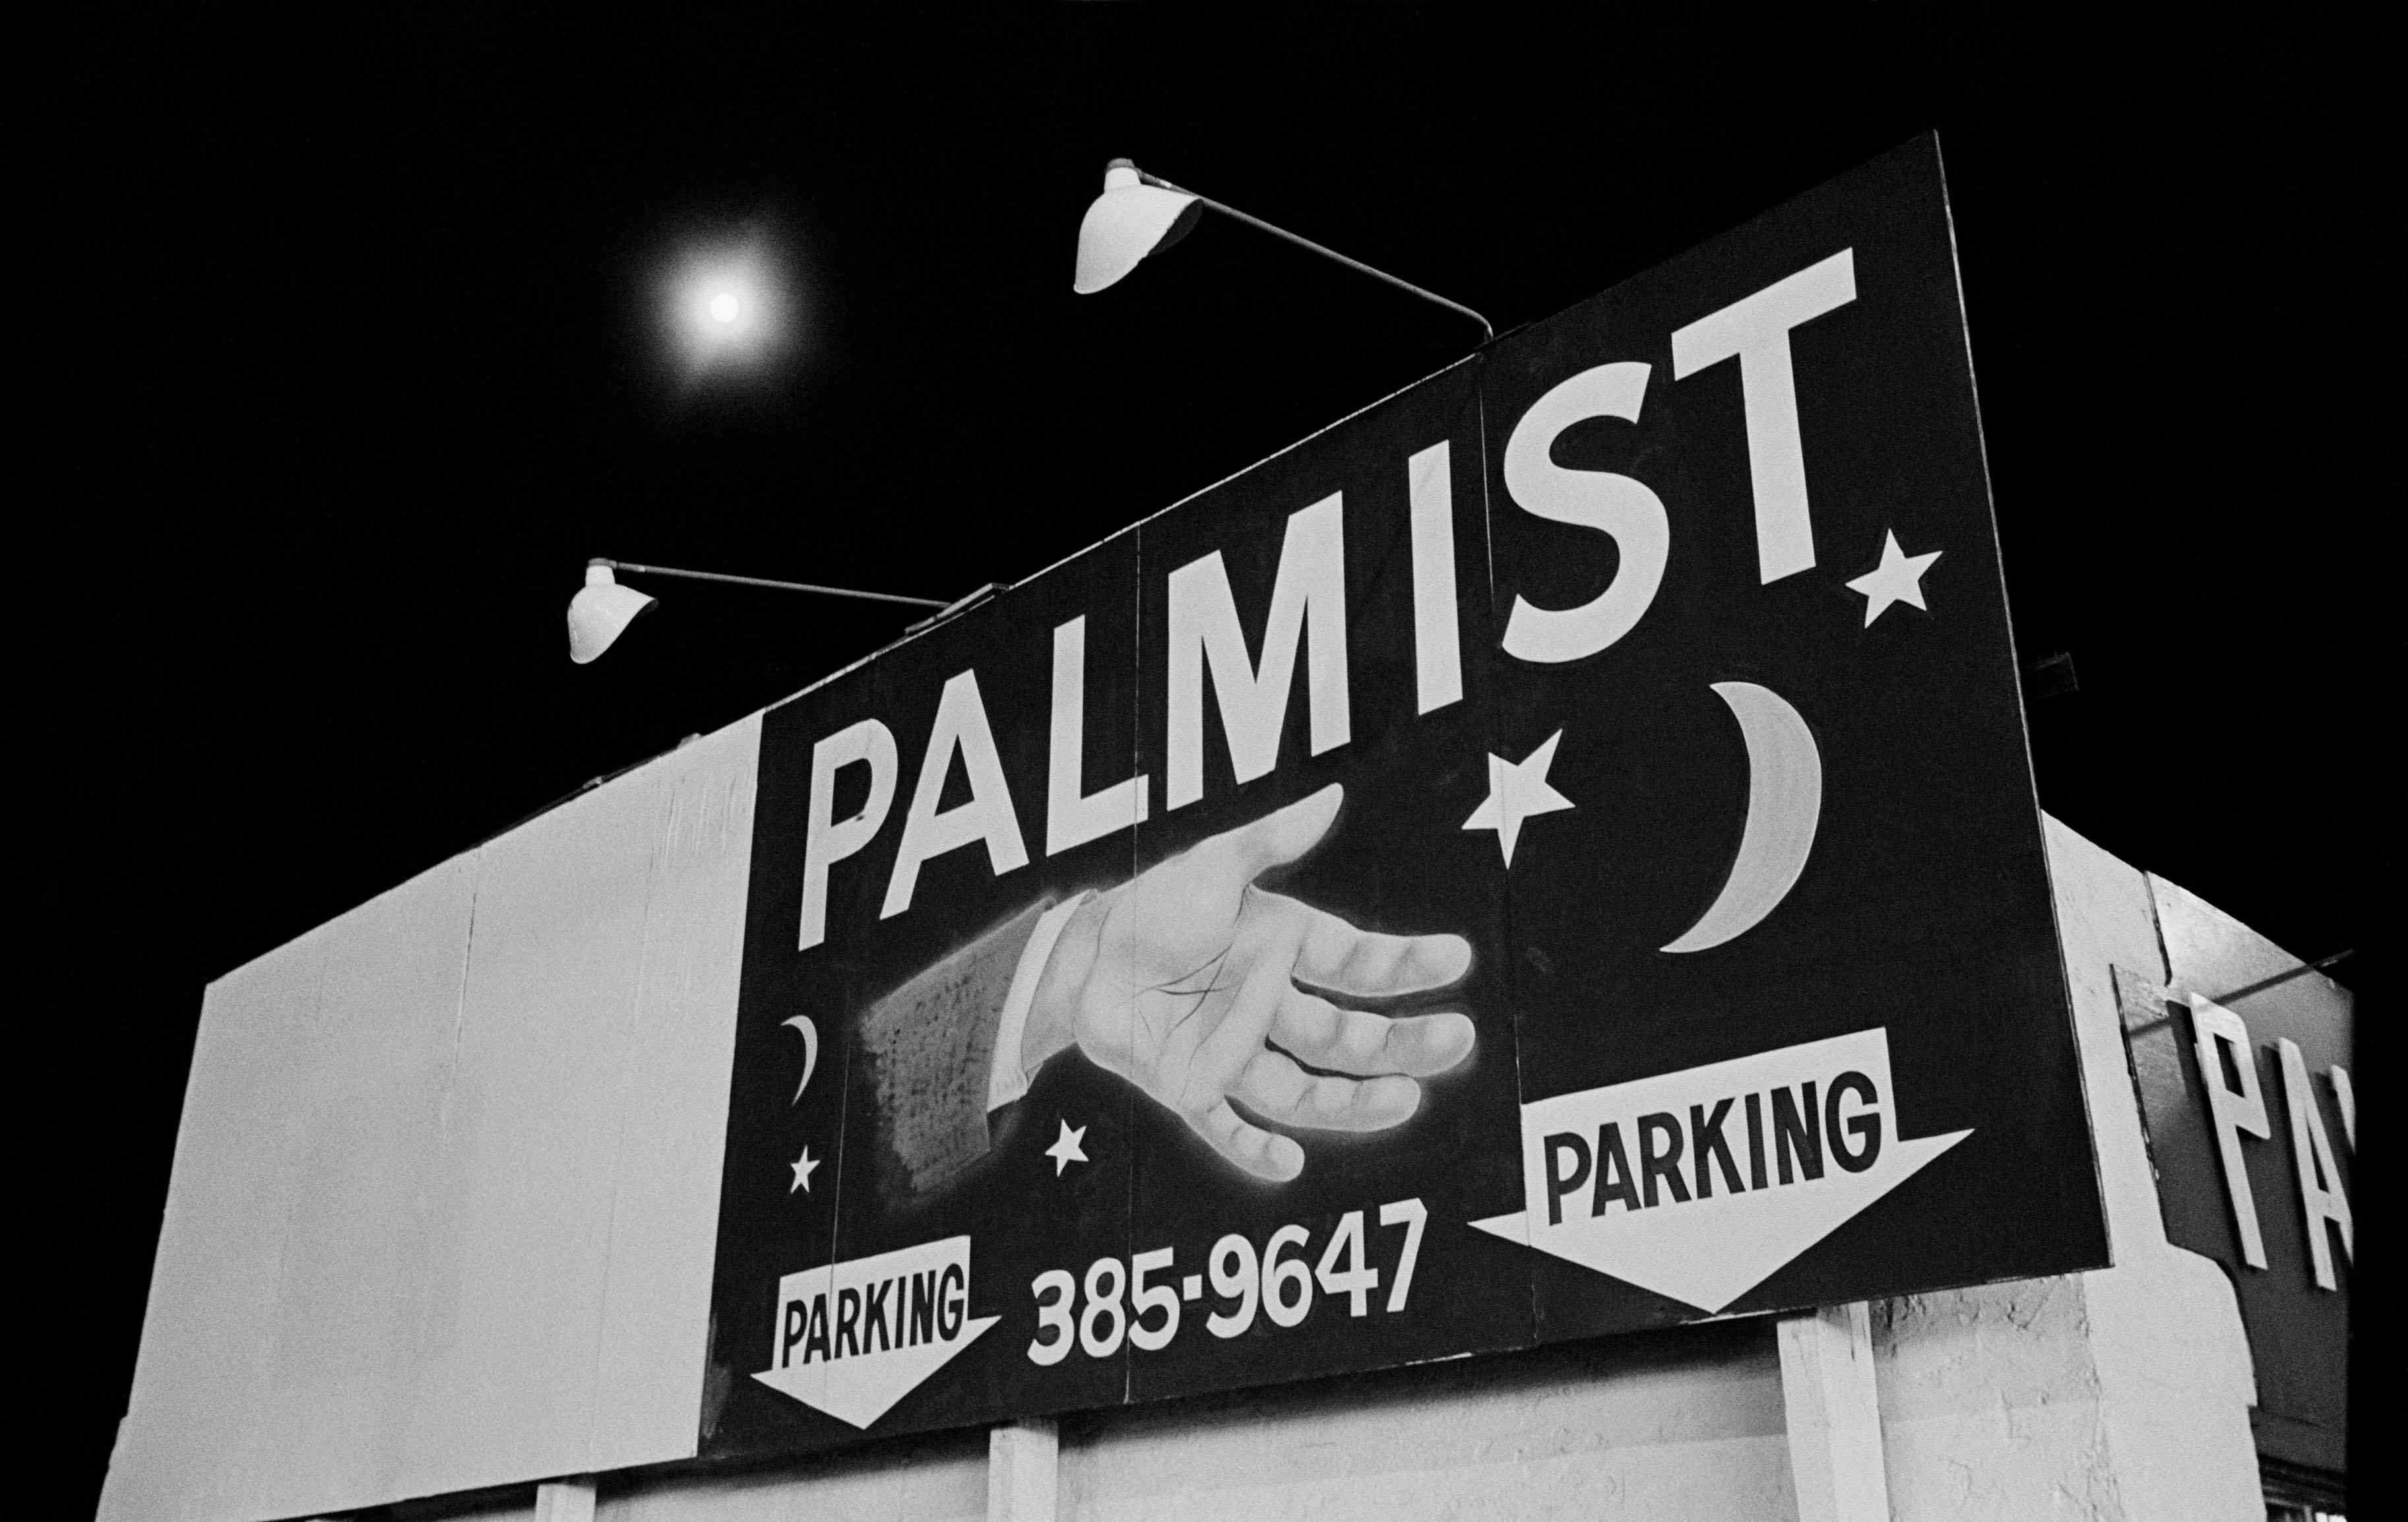 The Palmist - Street photography, America, 20th Century, Robert Frank, Surreal